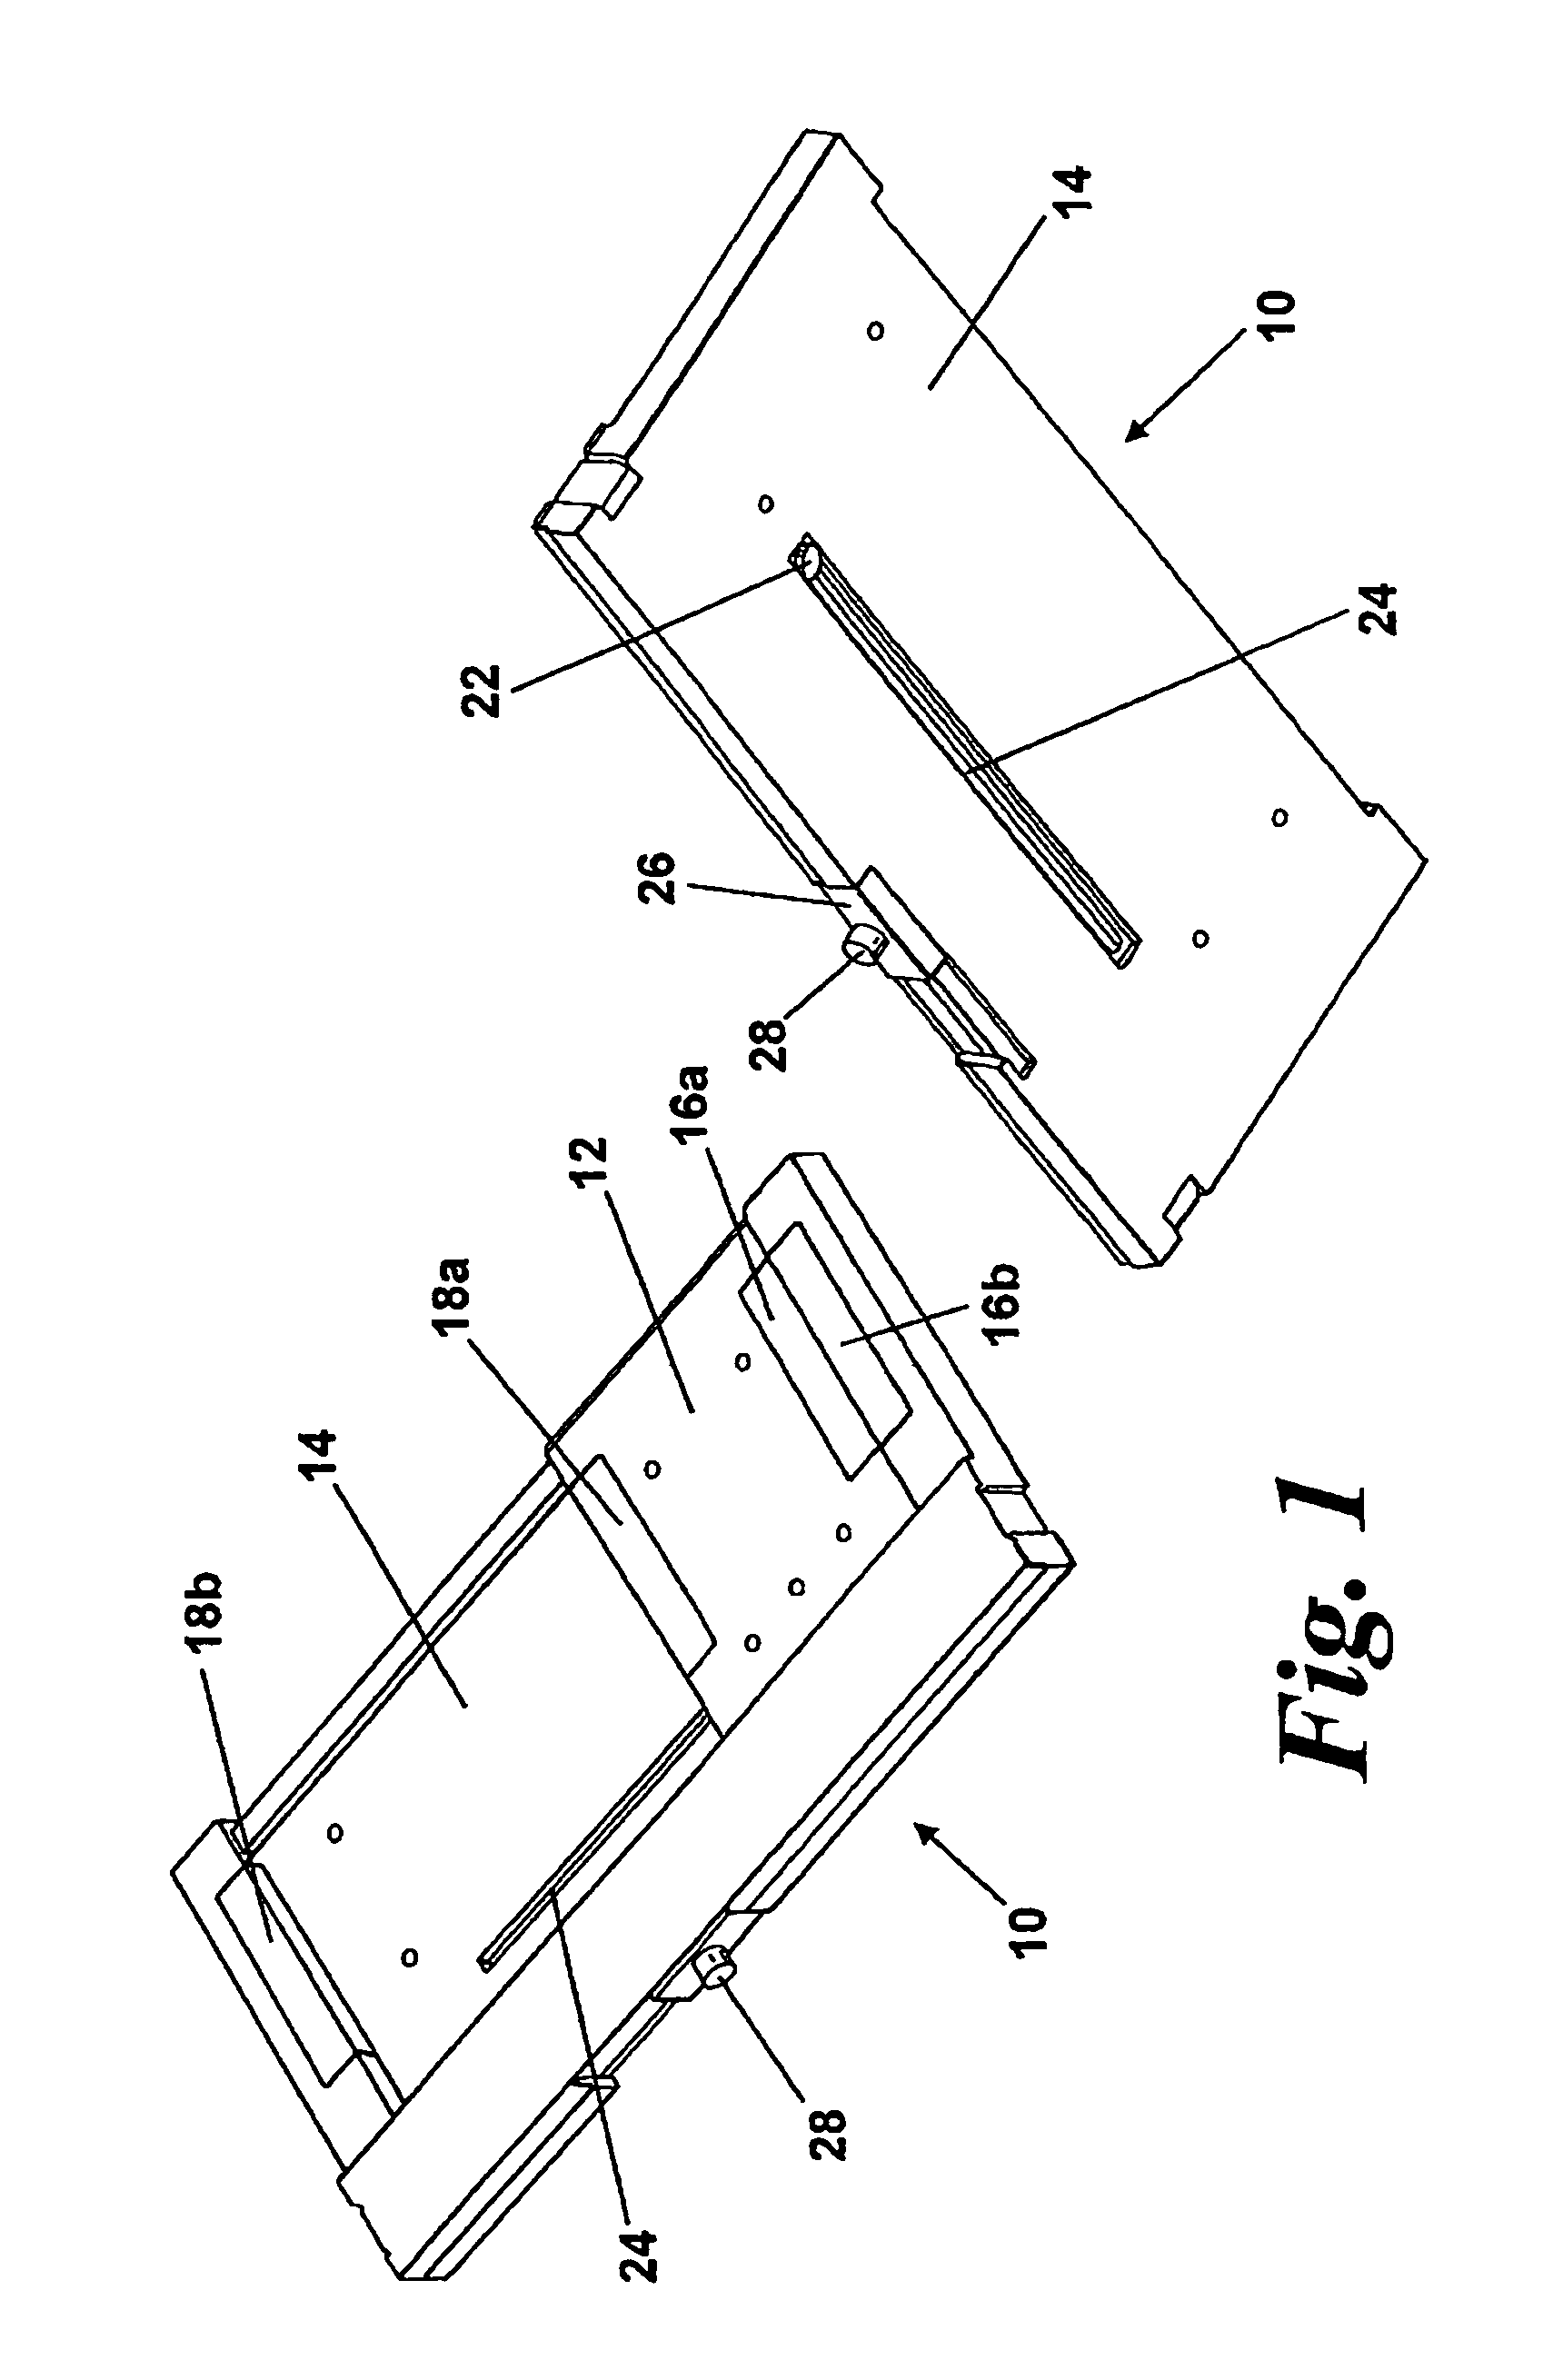 Electronic device sliding mechanism